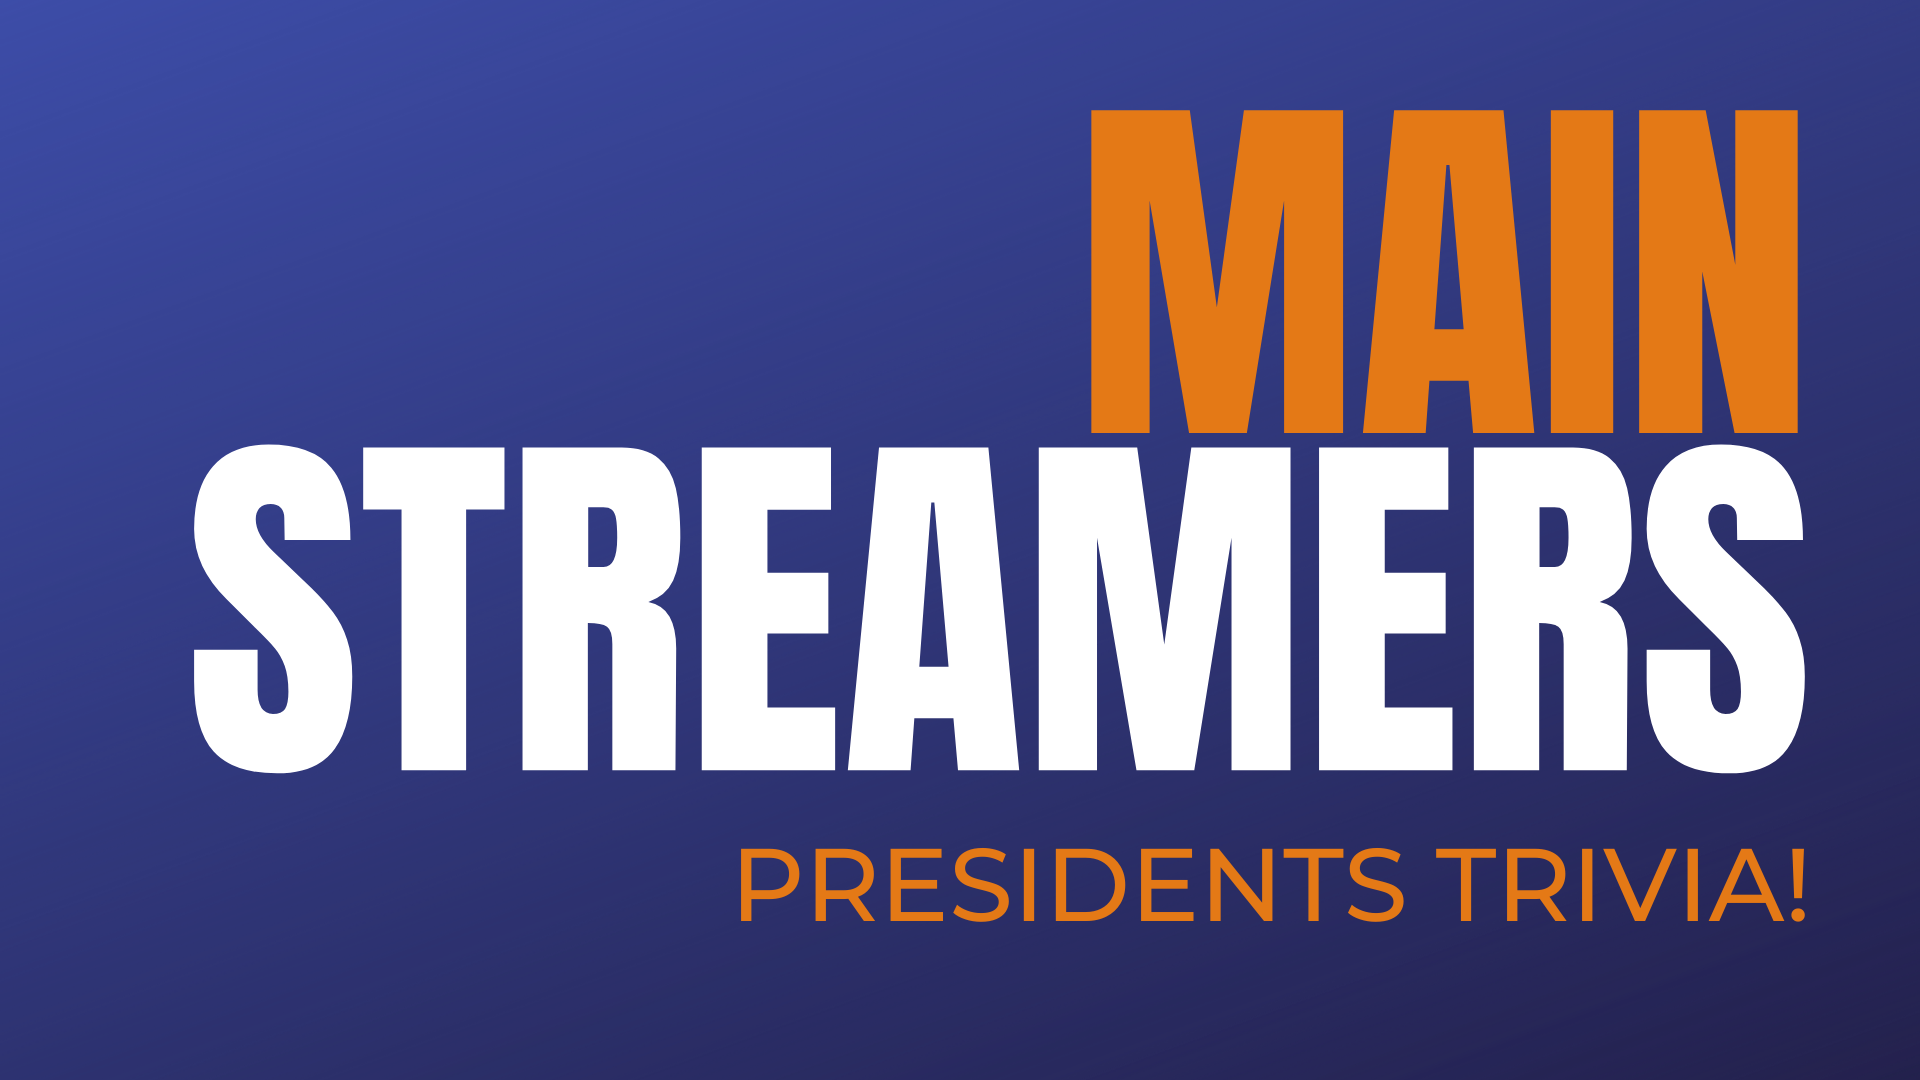 MainStreamers - Presidents Trivia!